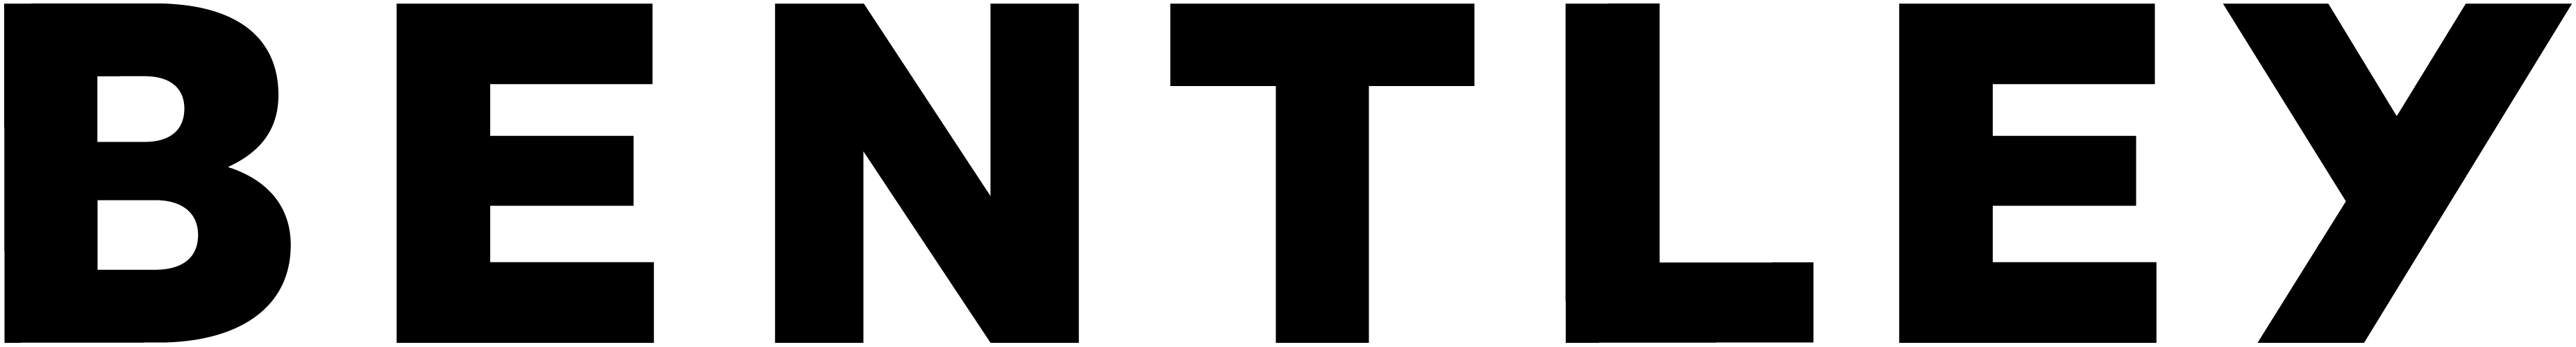 Bentley-logo-BLACK